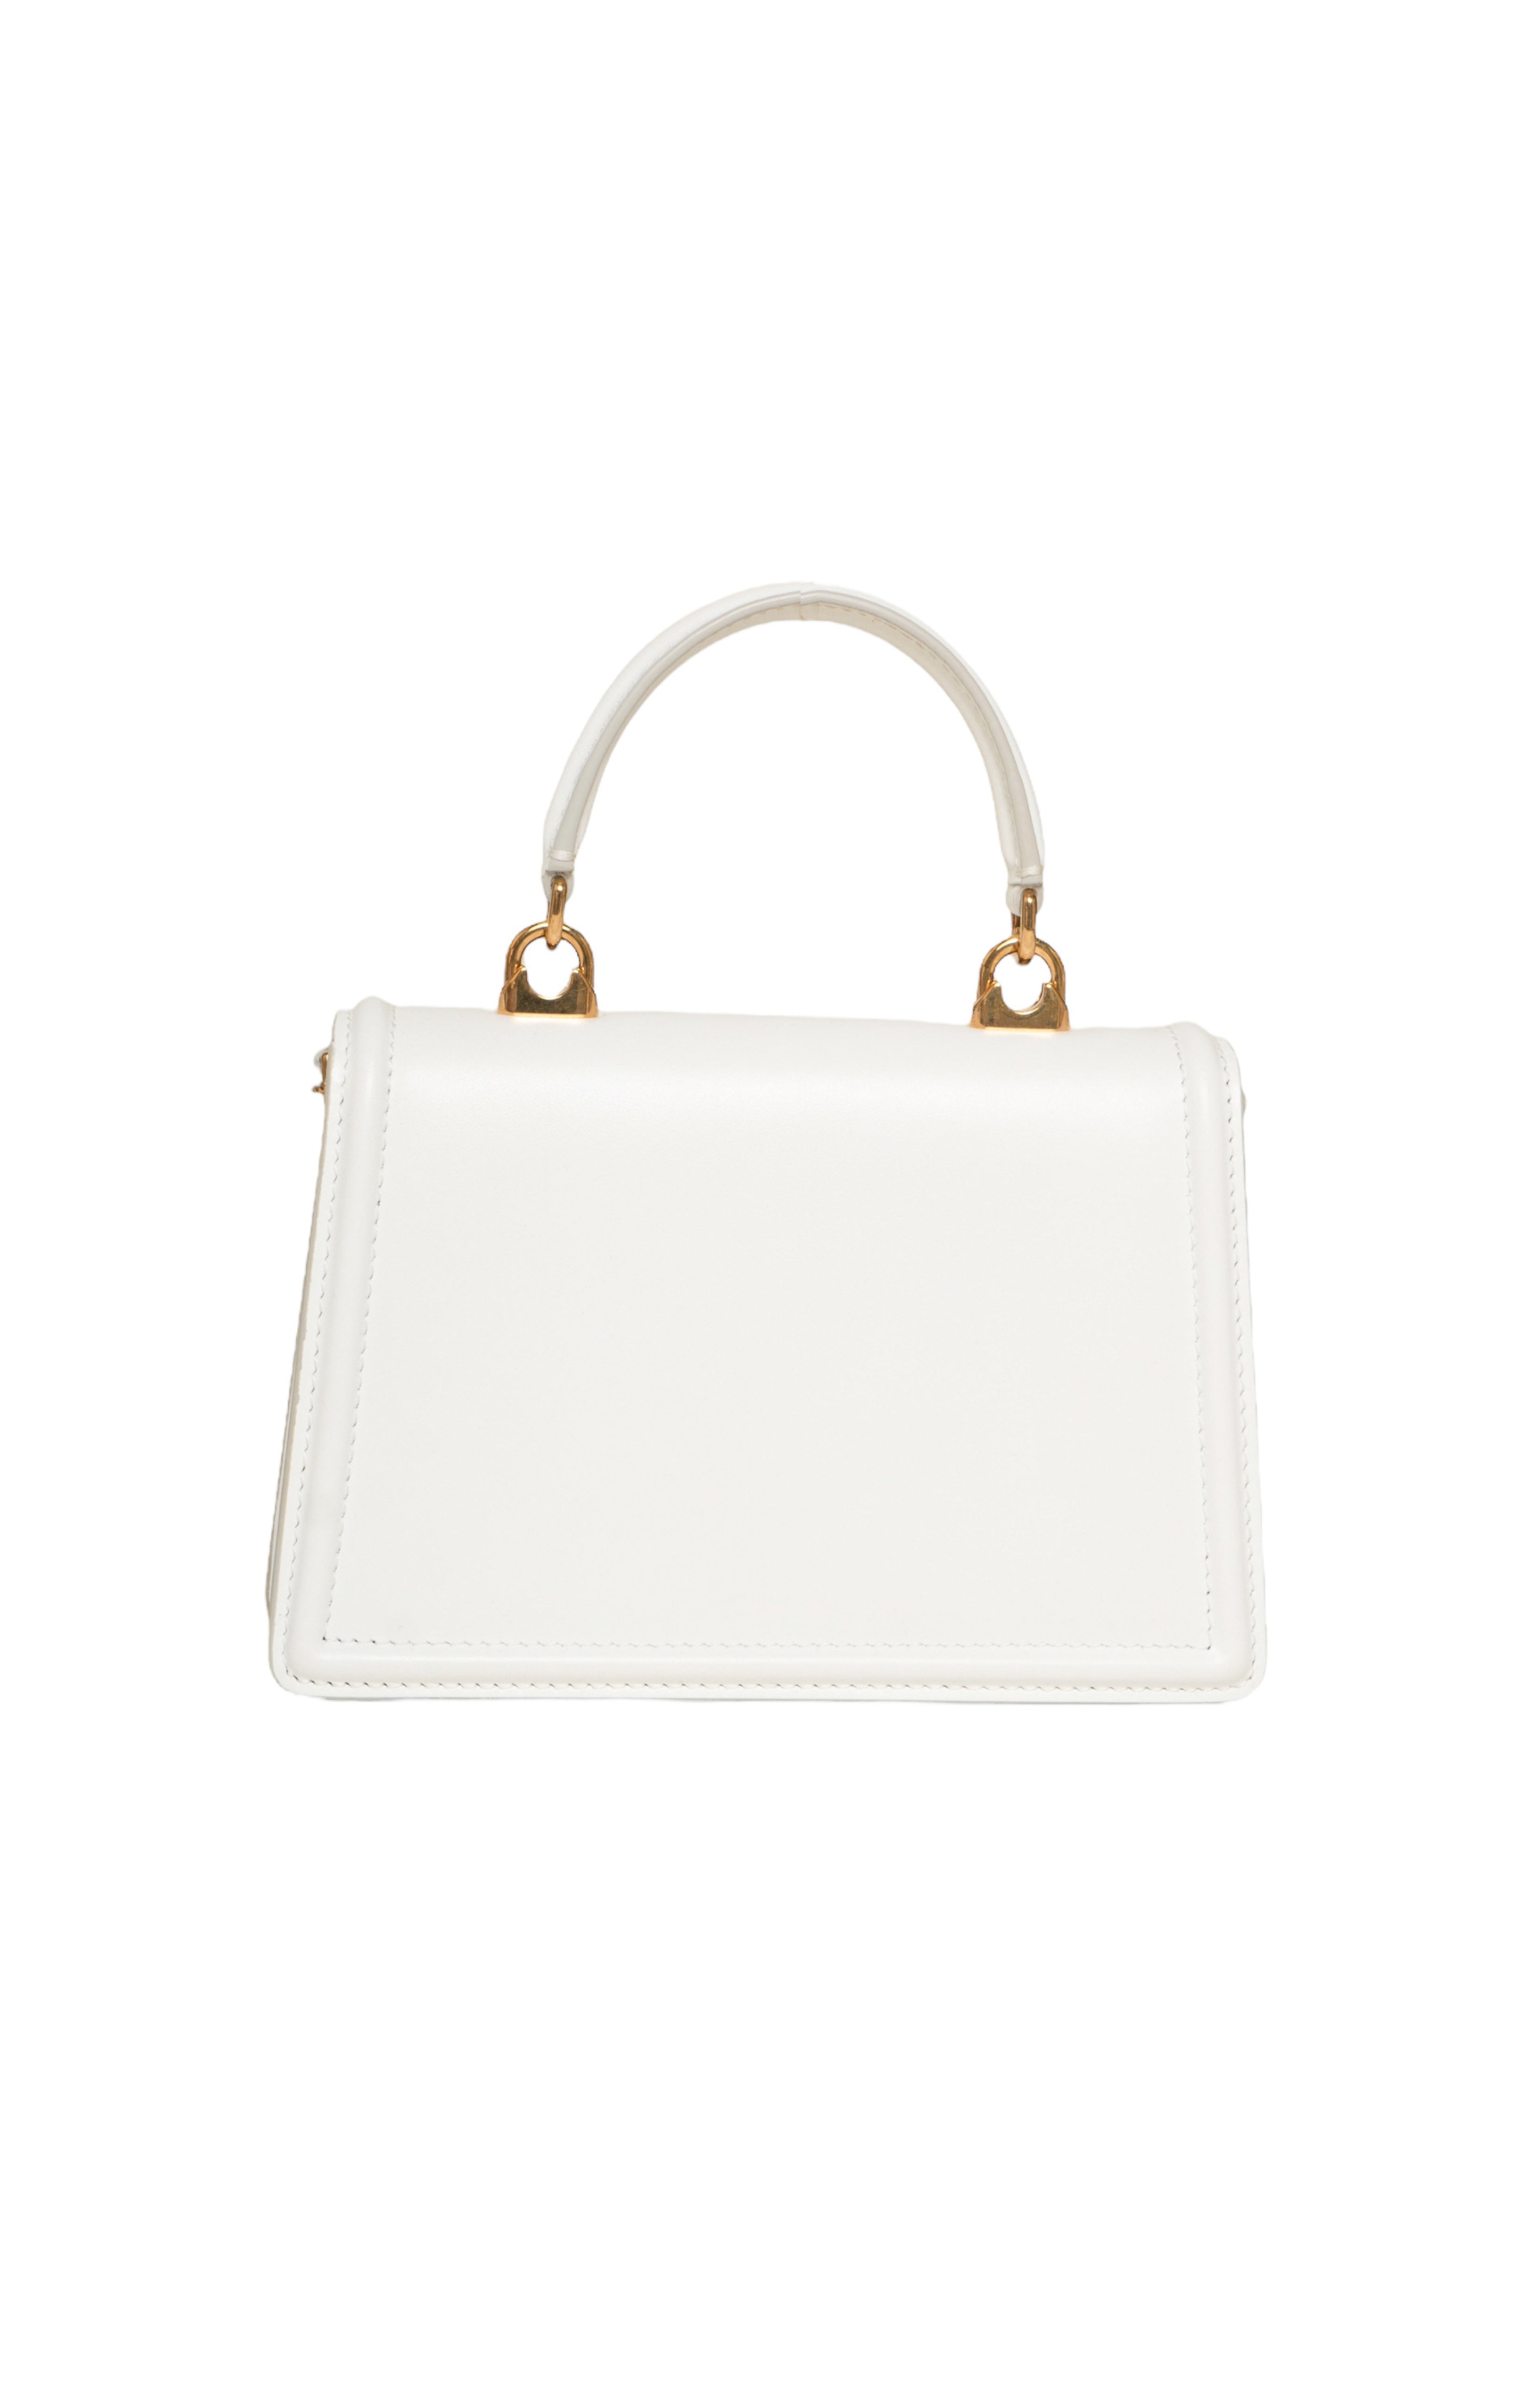 DOLCE & GABBANA Bag Size: 7.5" x 2" x 5"; 2.75" drop handle